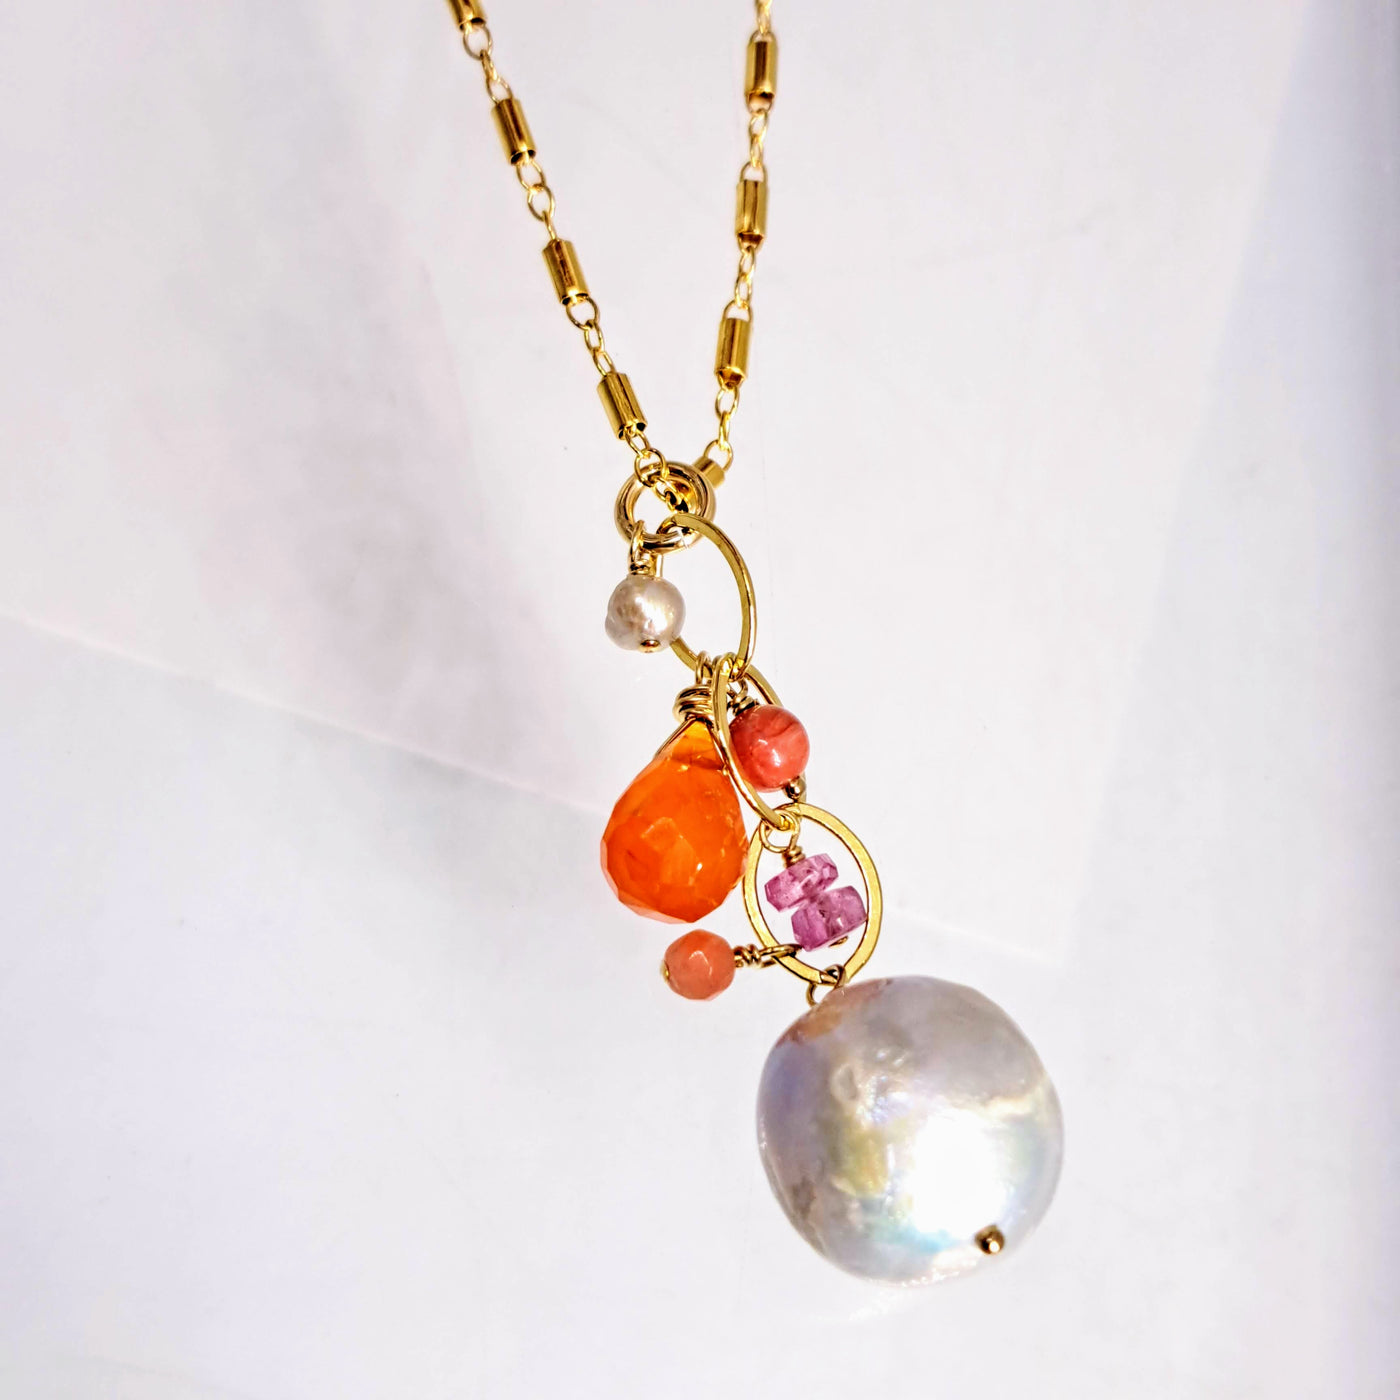 "Florida Sun" Pendant Necklace - Tourmaline, Opal, Carnelian, Coral, Pearl, Gold Sterling